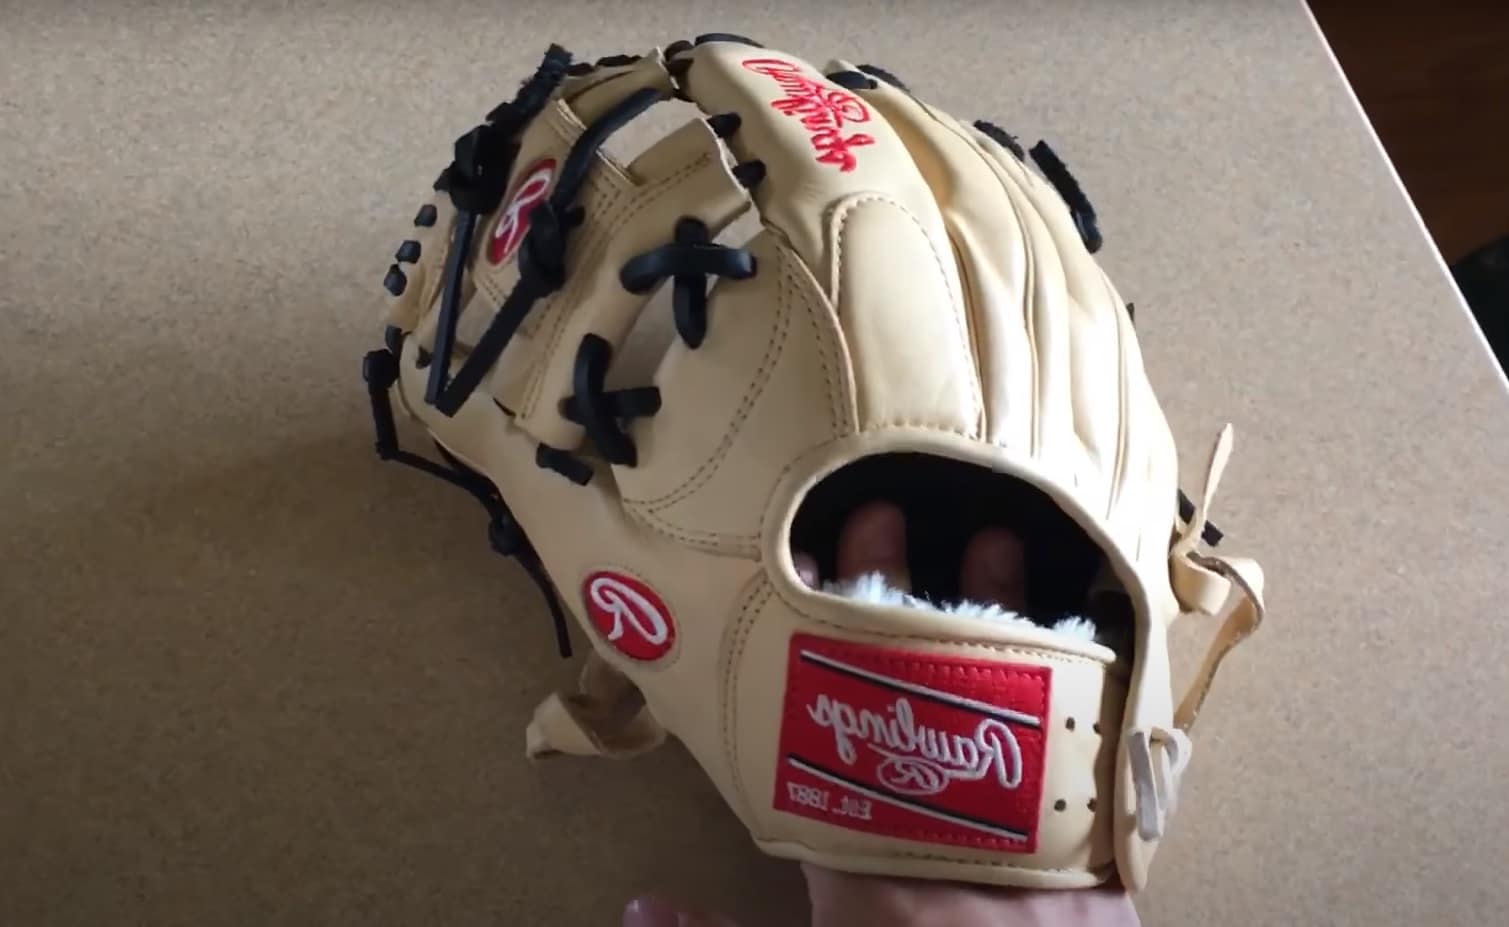 Rawlings Kids Baseball Gloves